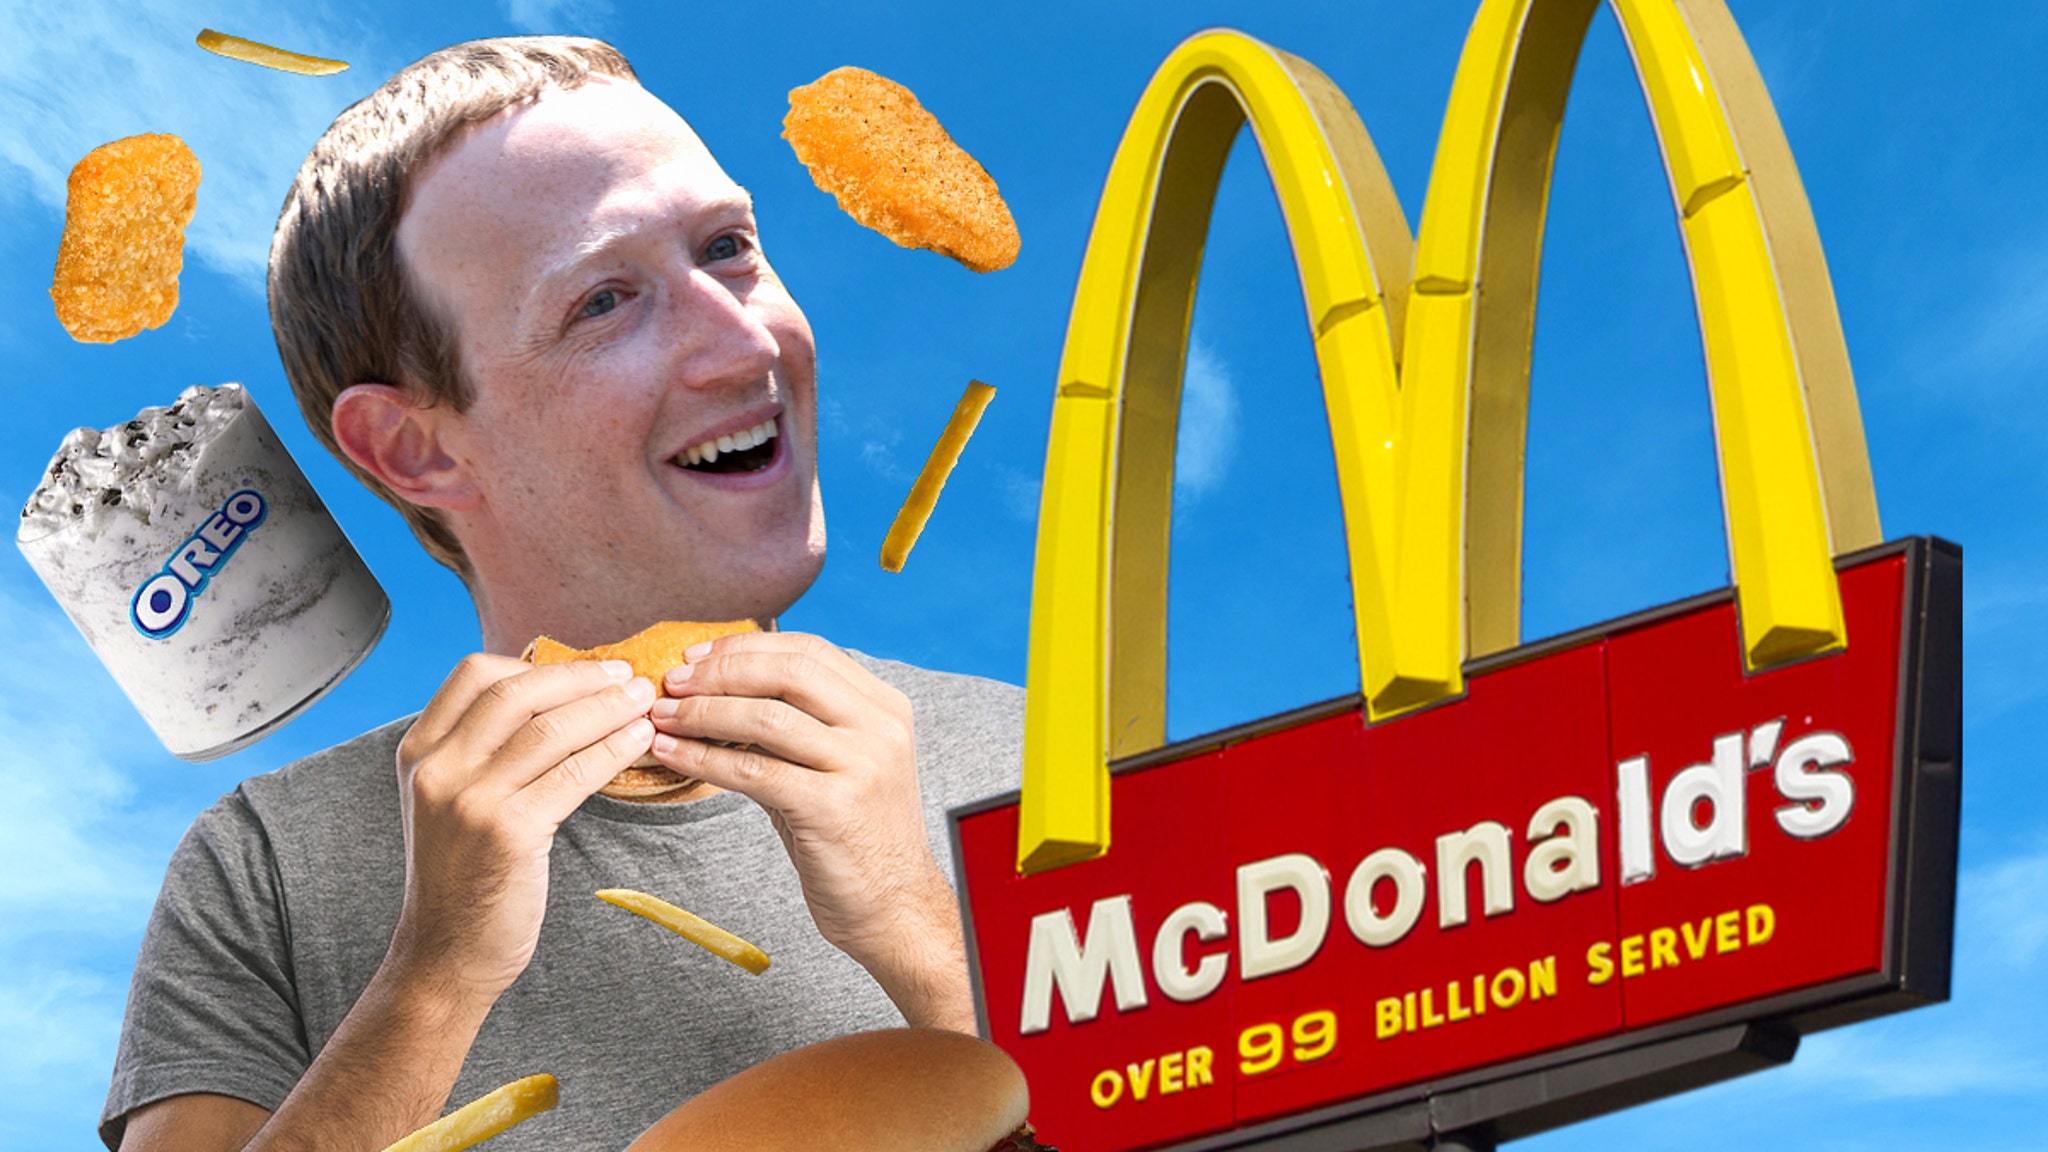 Mark Zuckerberg Reveals McDonalds Order, 4k-Calorie Diet To Offset MMA Training